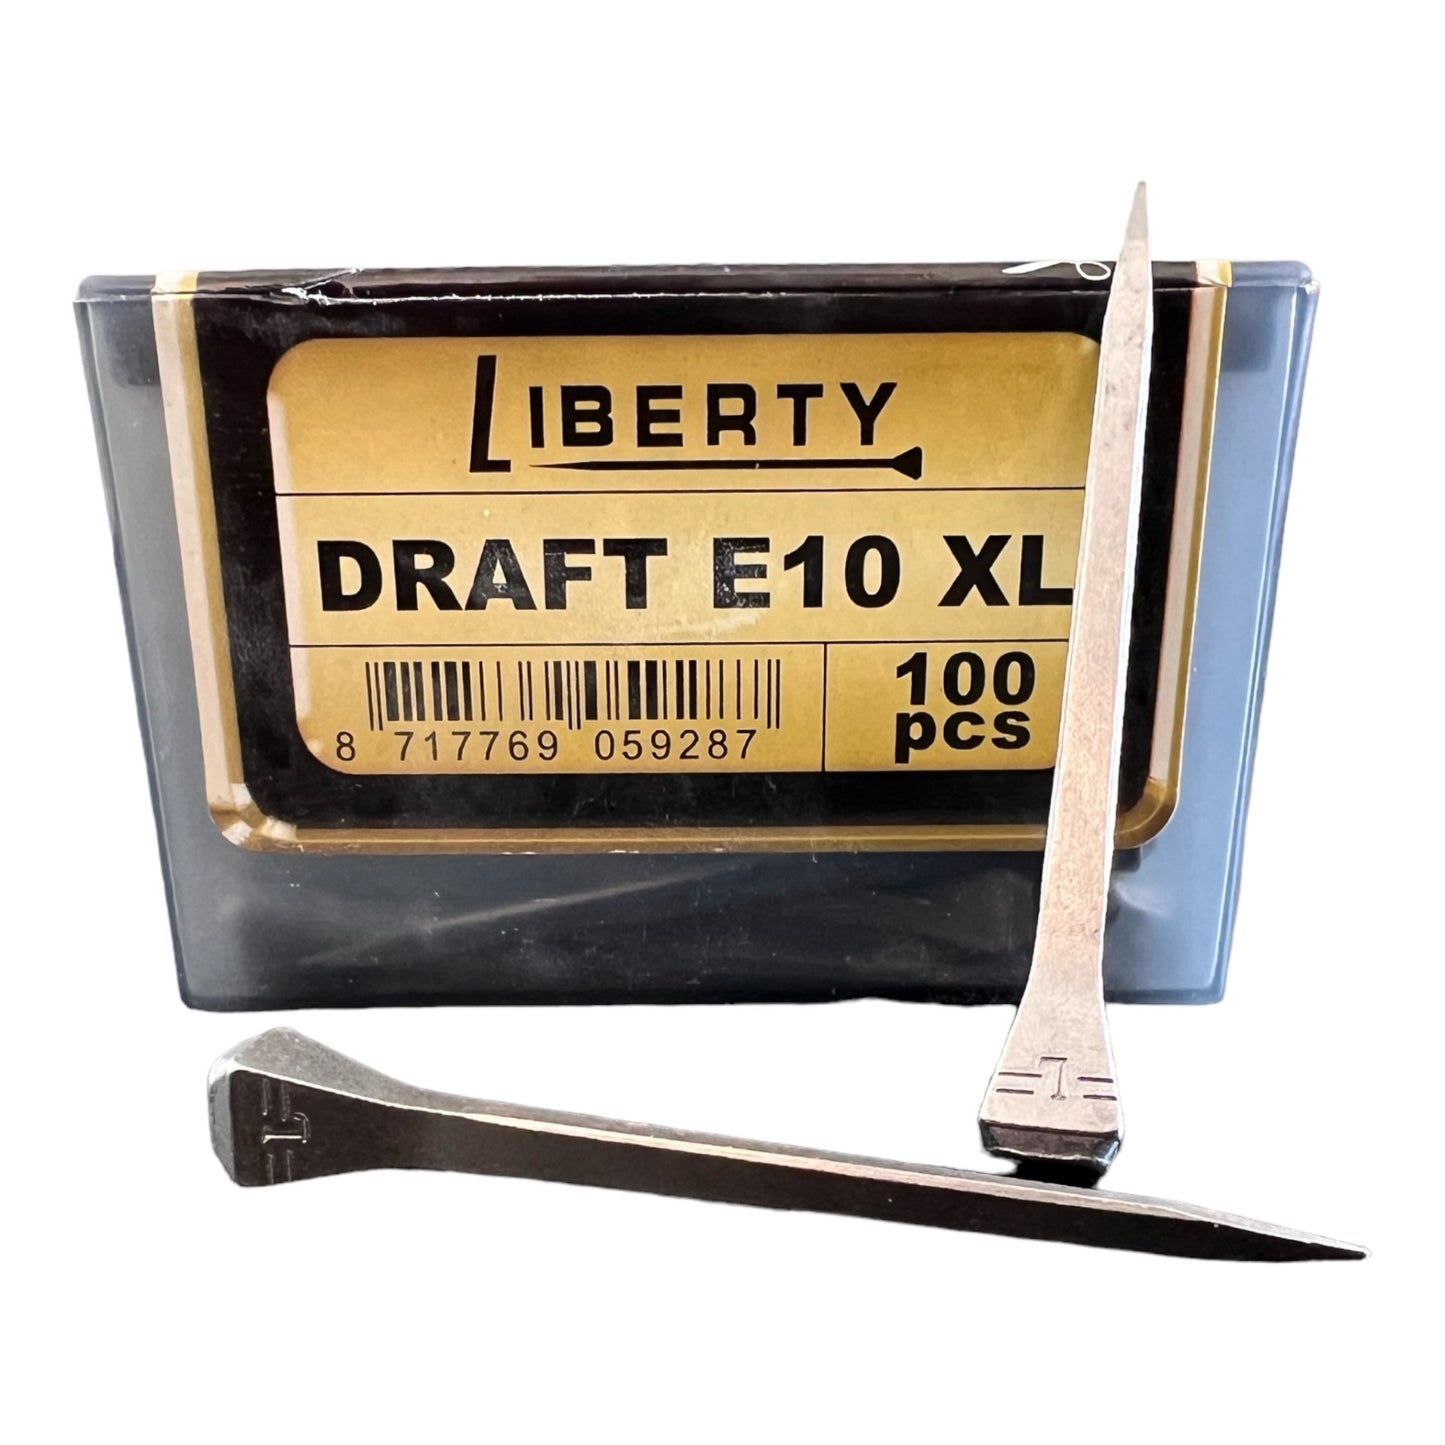 LIBERTY DRAFT XL E10 NAILS 100PCS